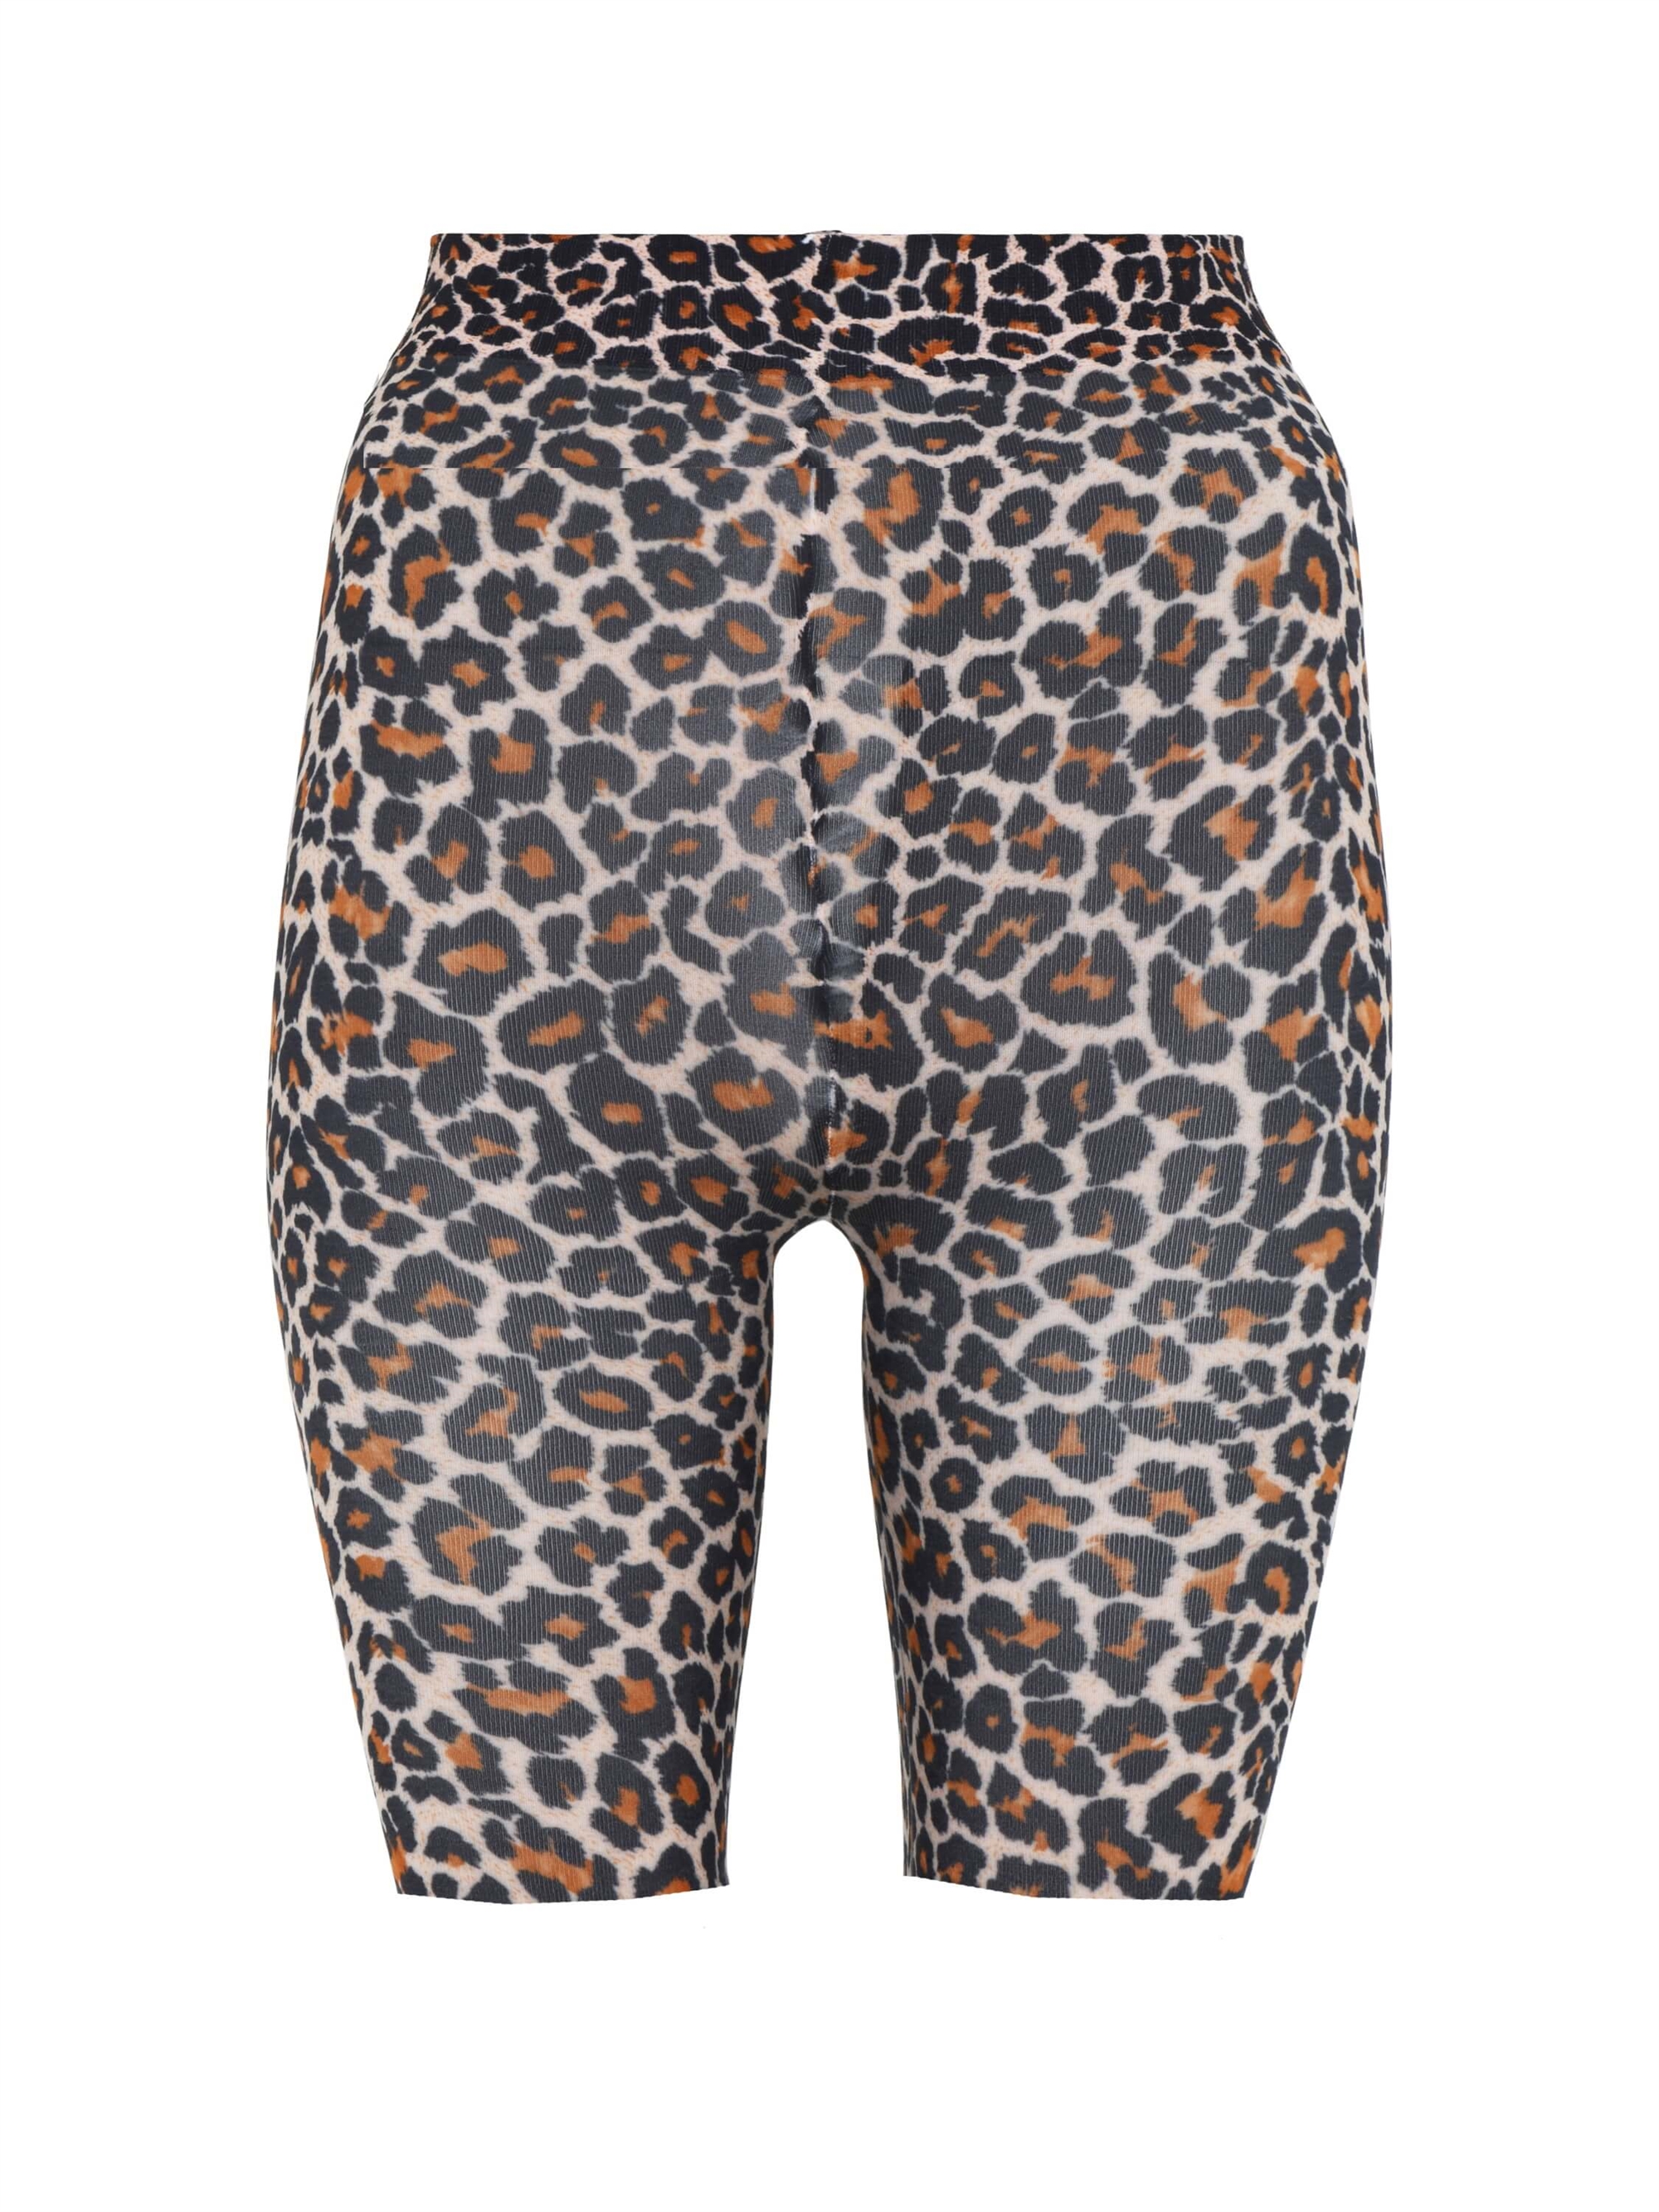 Anmelder moral pie Sneaky Fox - Shorts - Leopard Shorts - 189,00 DKK